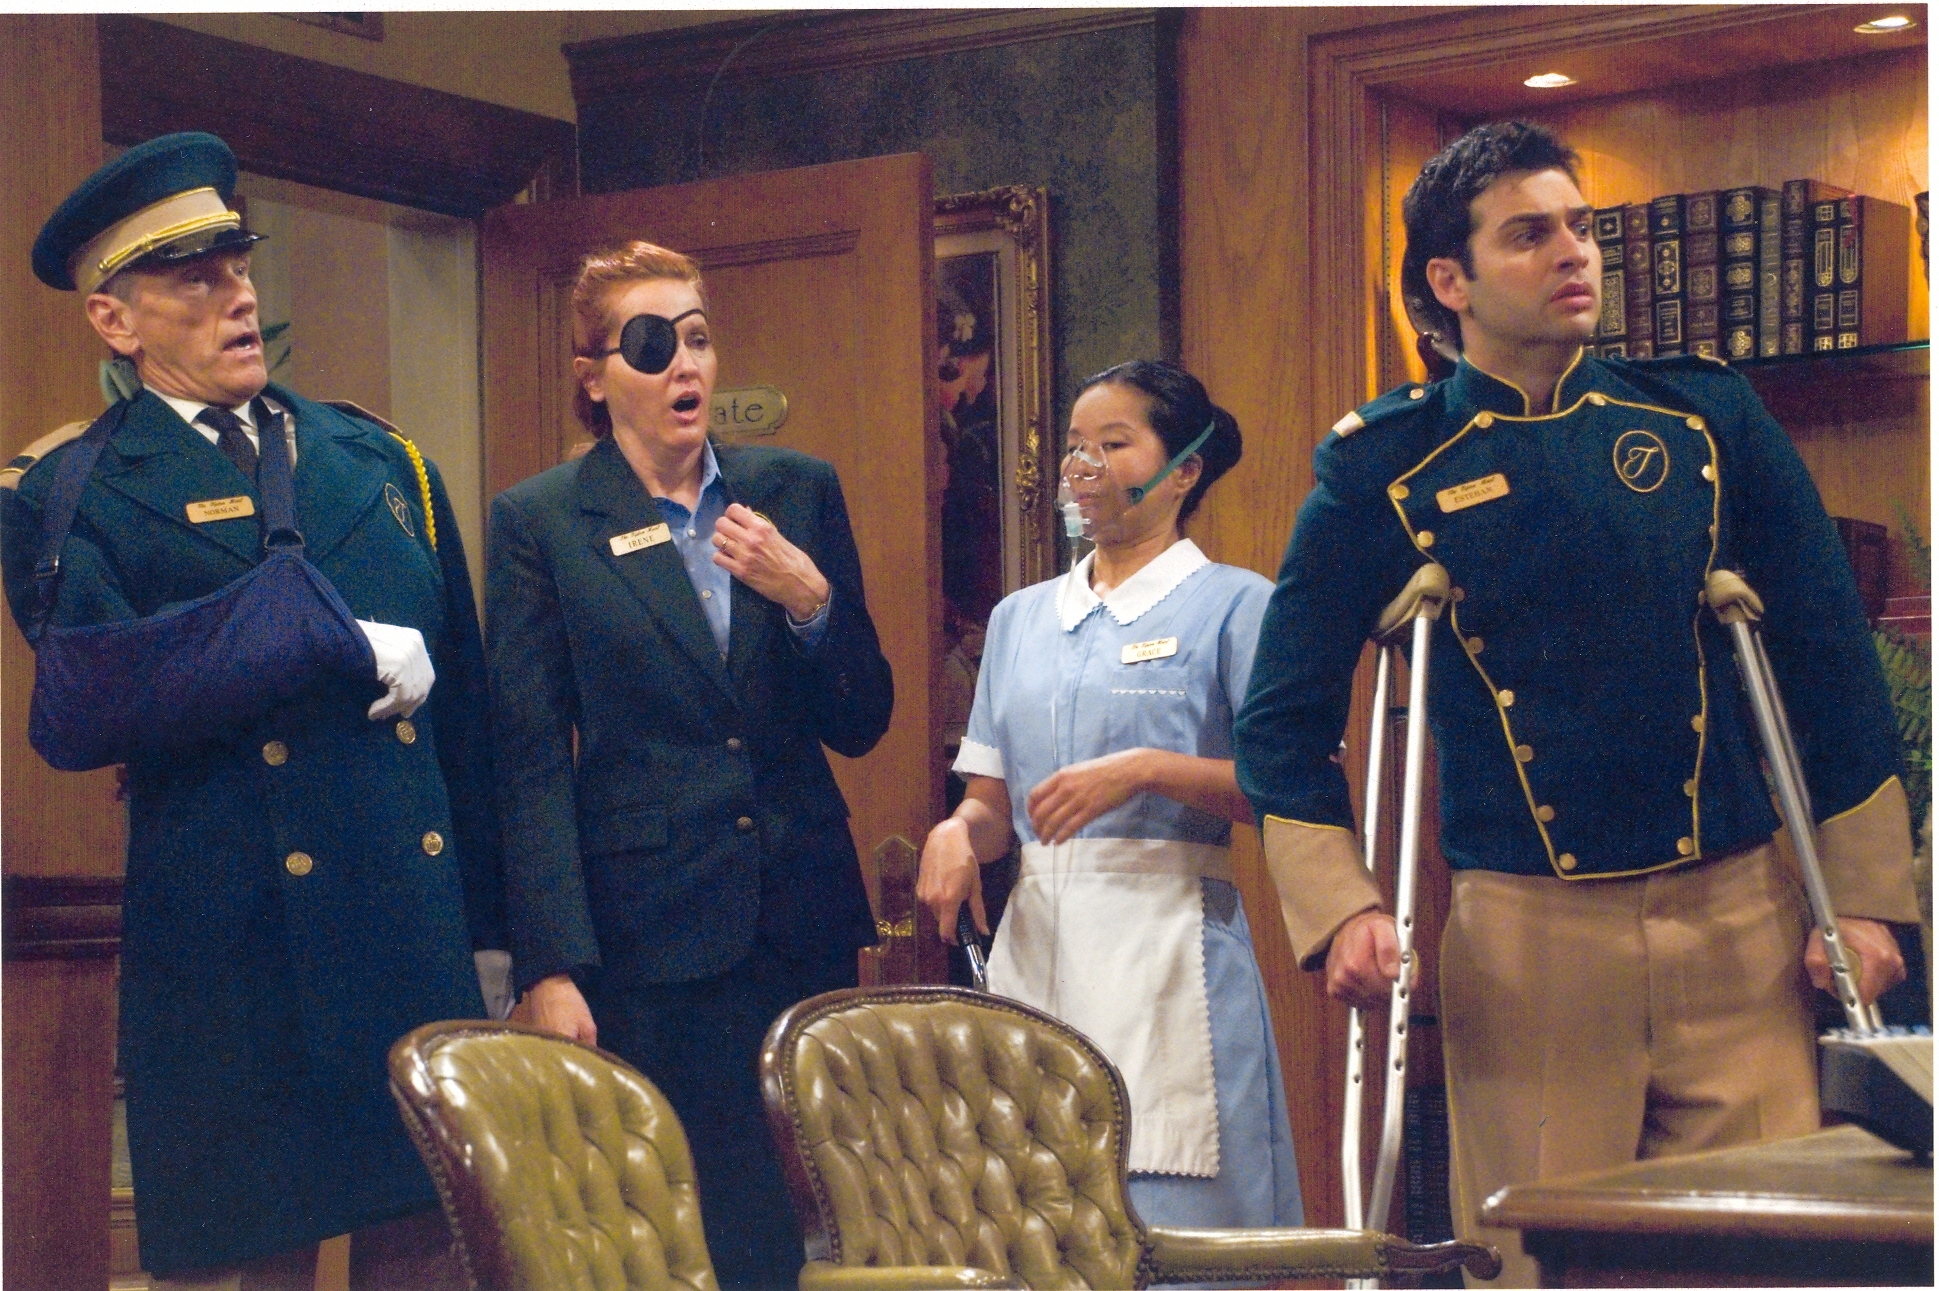 The Tipton Staff: Antony Acker (Norman the Doorman), Sharon Jordan (Irene the Concierge), Naomi Chan (Grace the Maid) and Adrian R'Mante (Esteban).